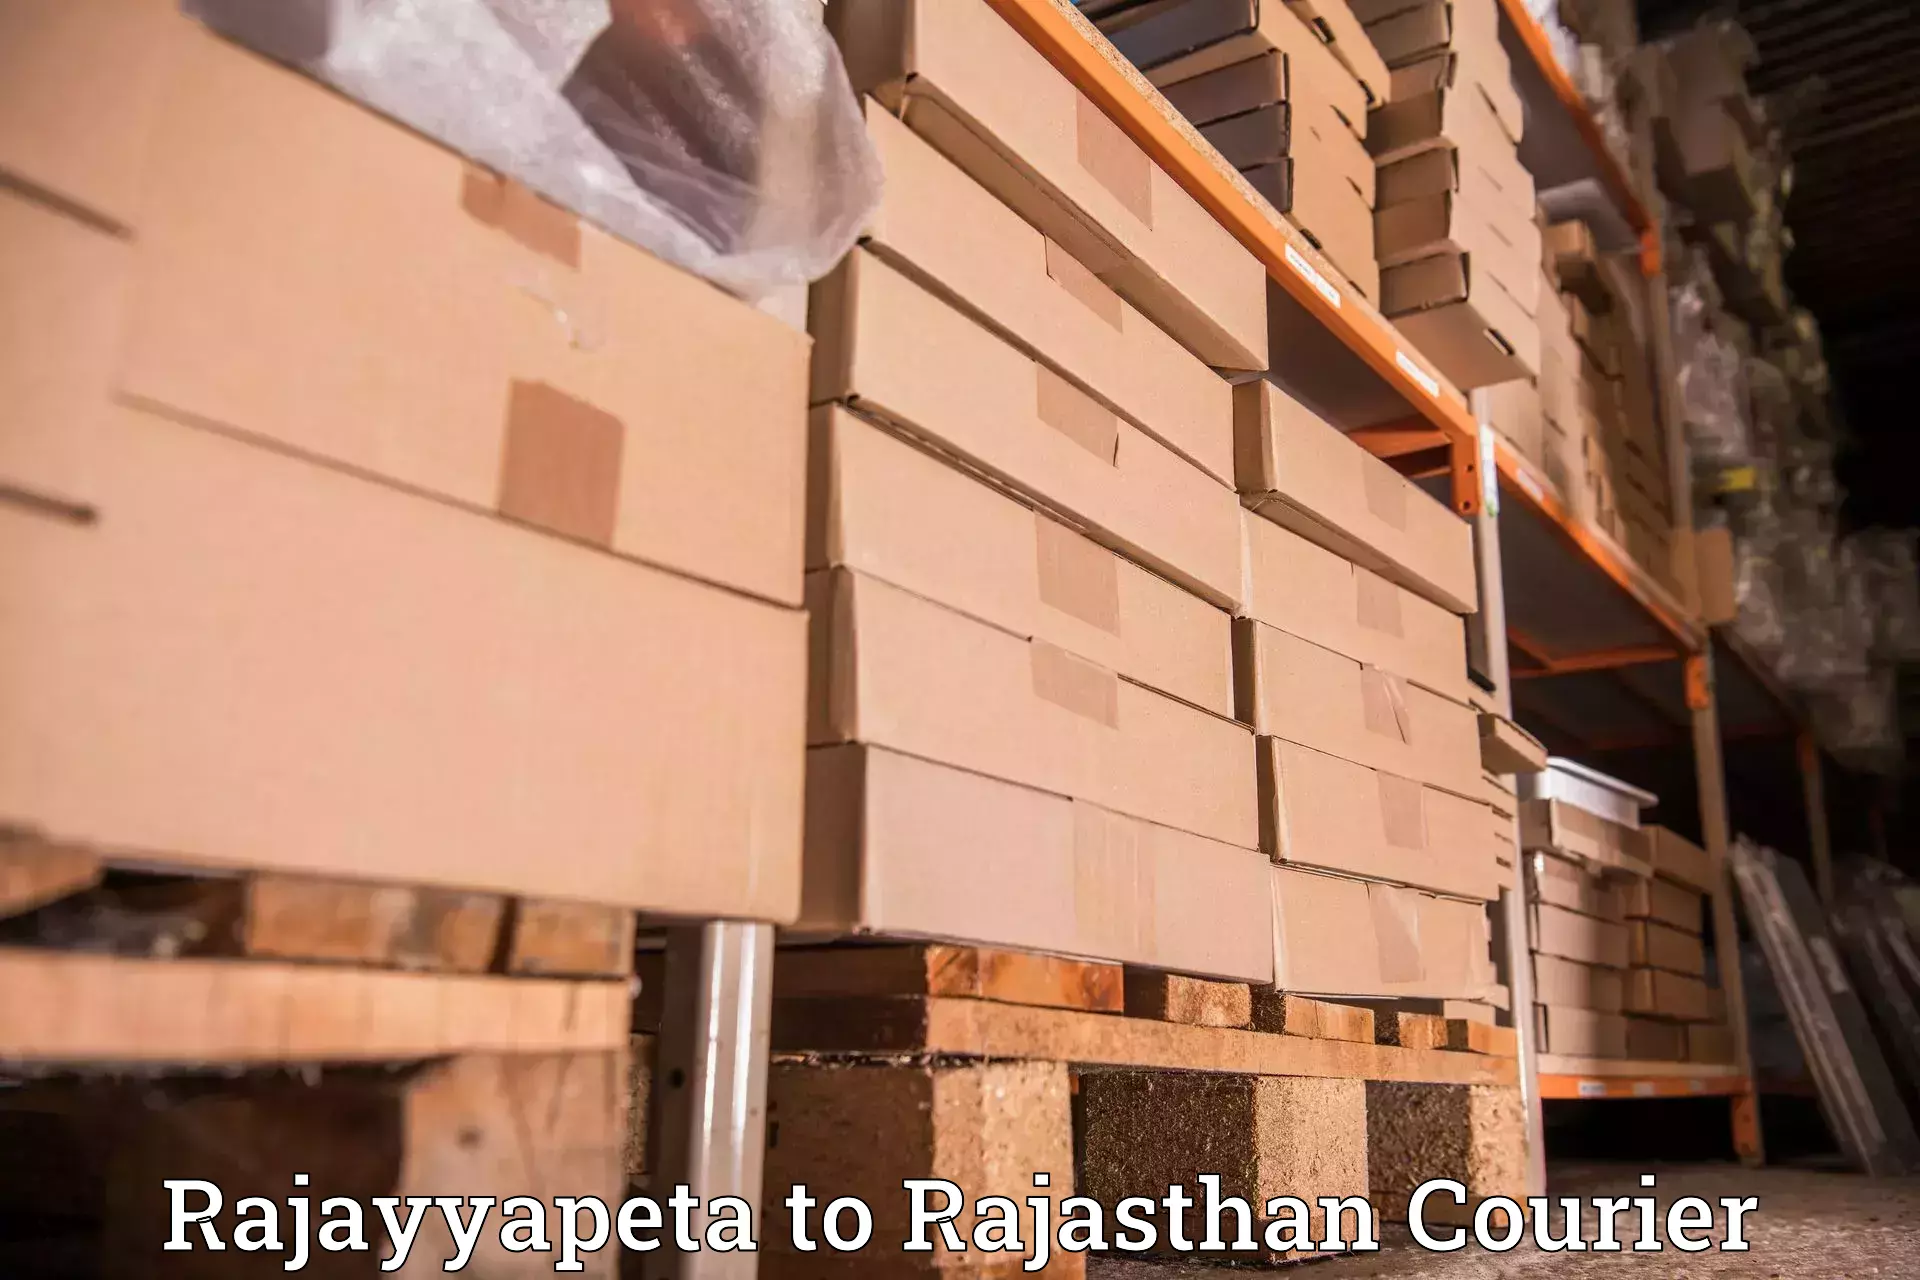 Courier service partnerships Rajayyapeta to Yathalakunta